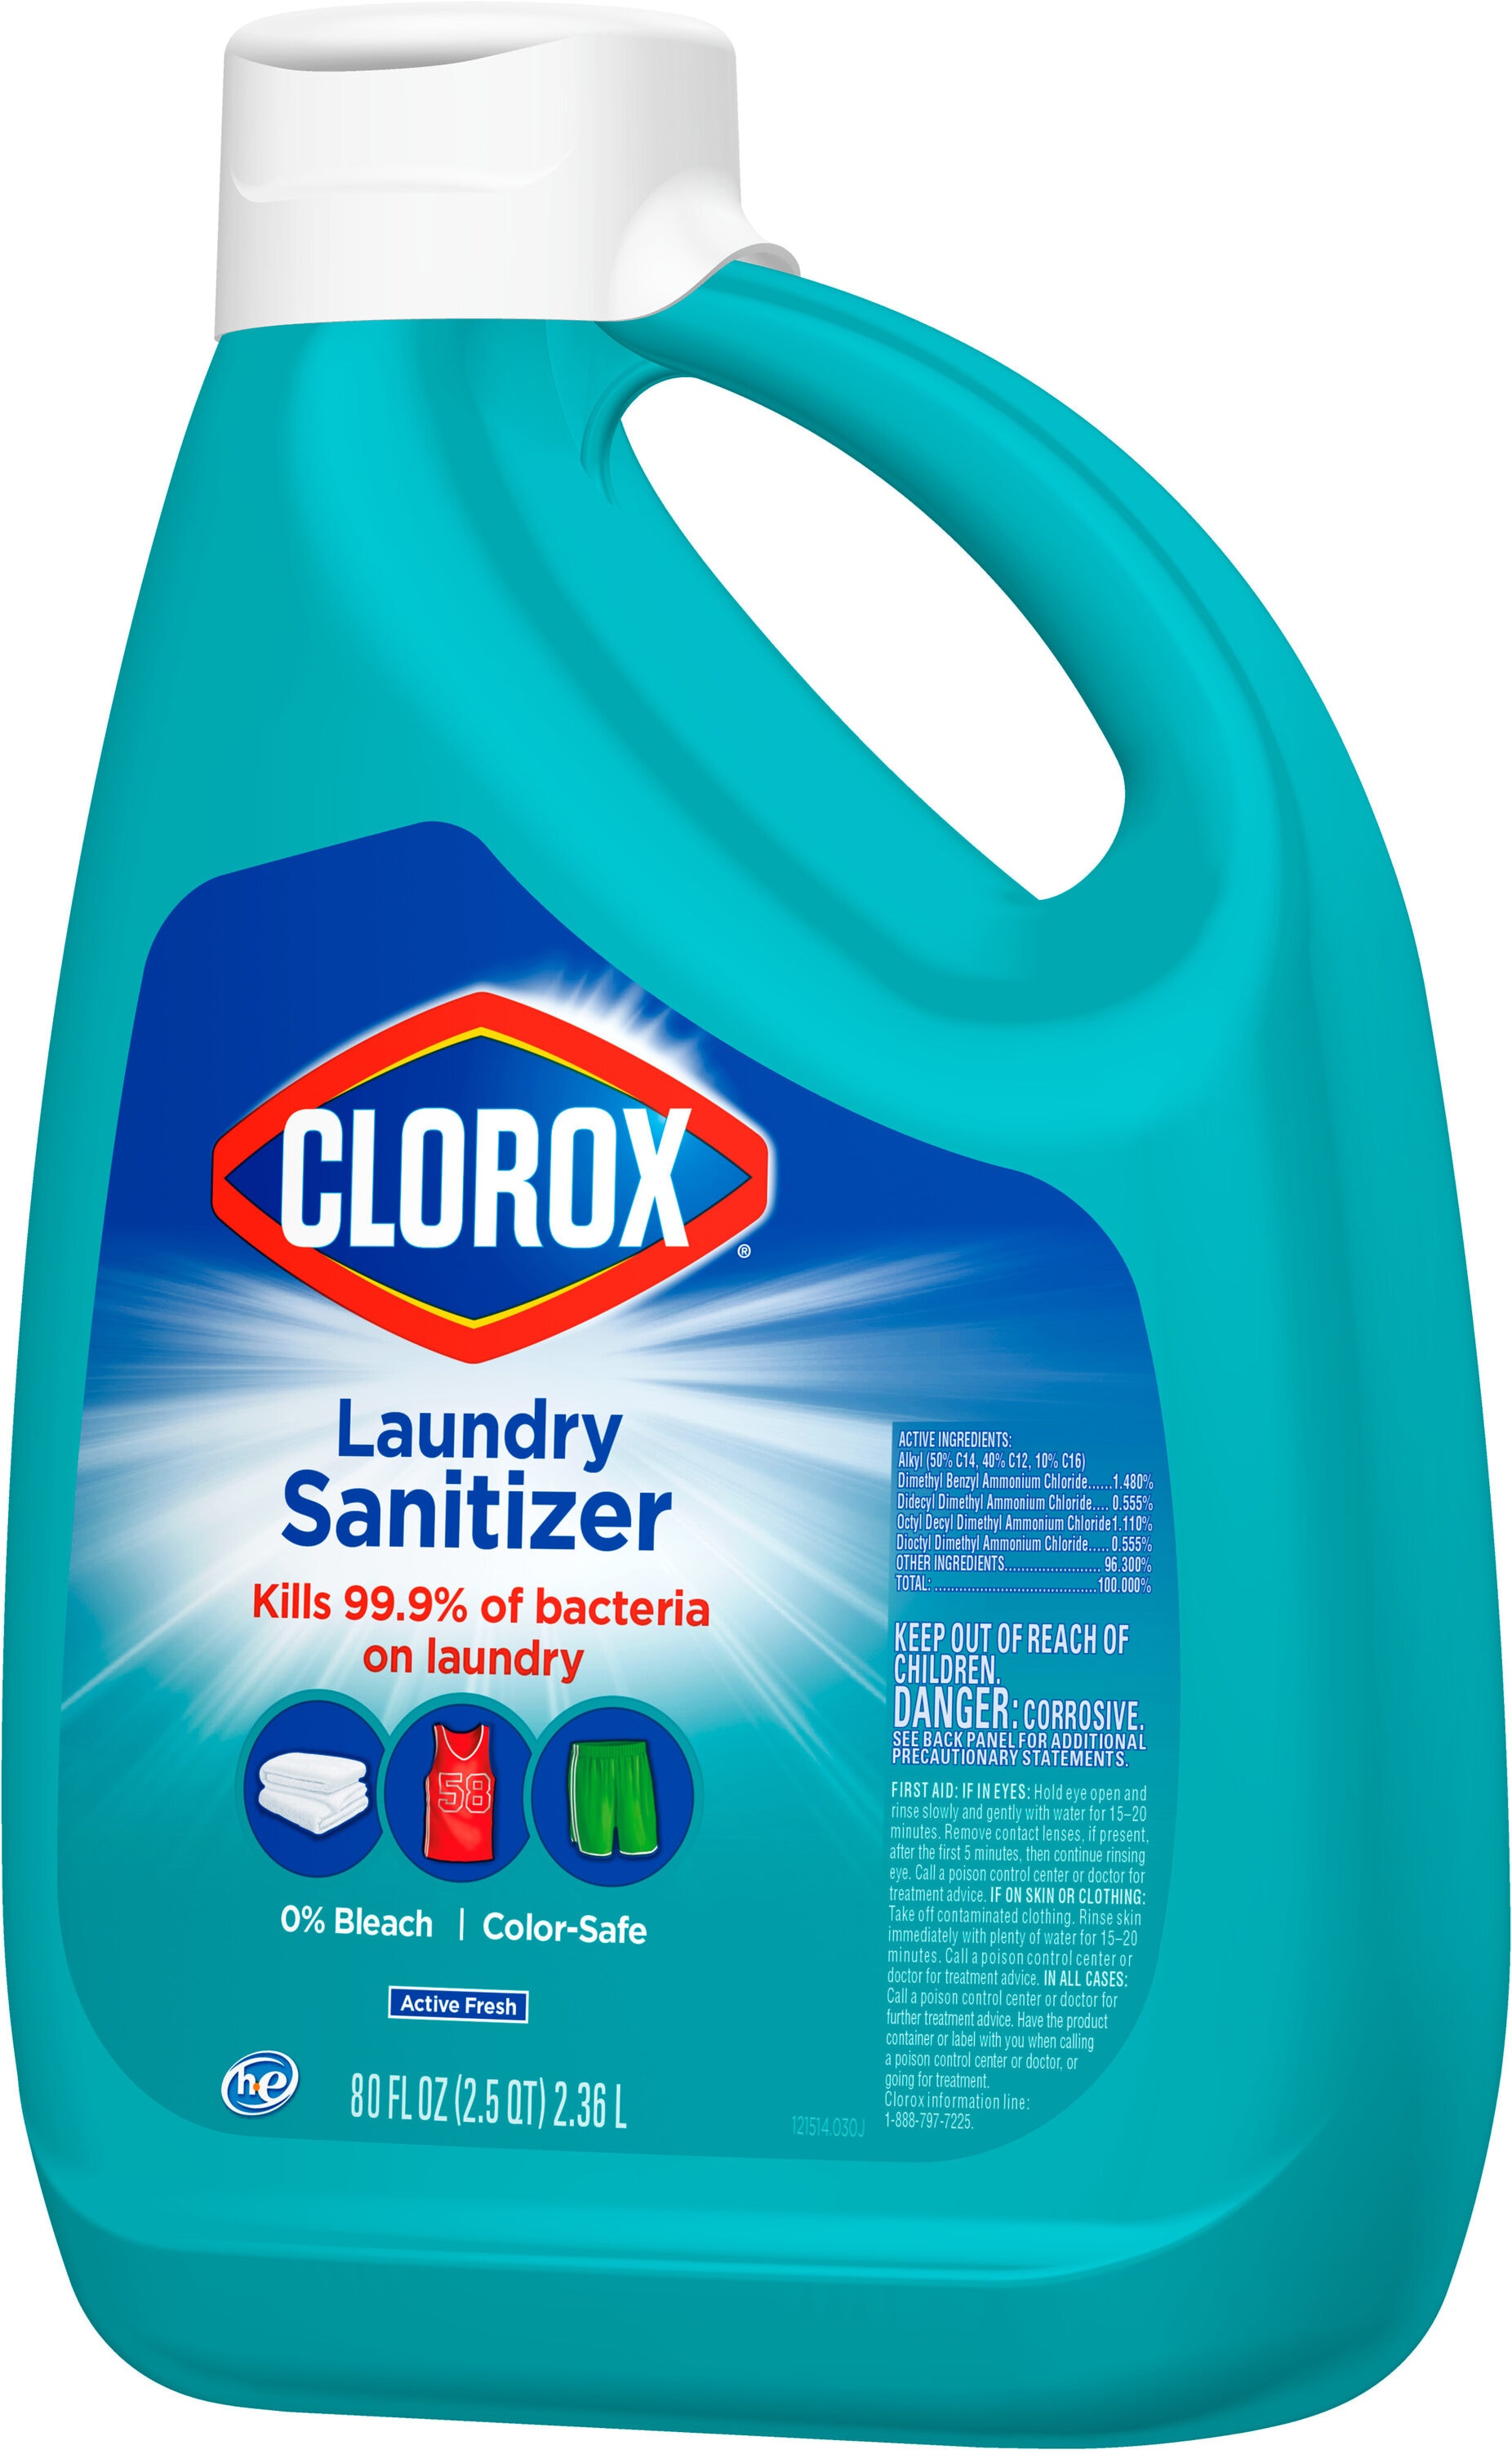 Clorox Fabric Sanitizer Spray 6/24 Oz